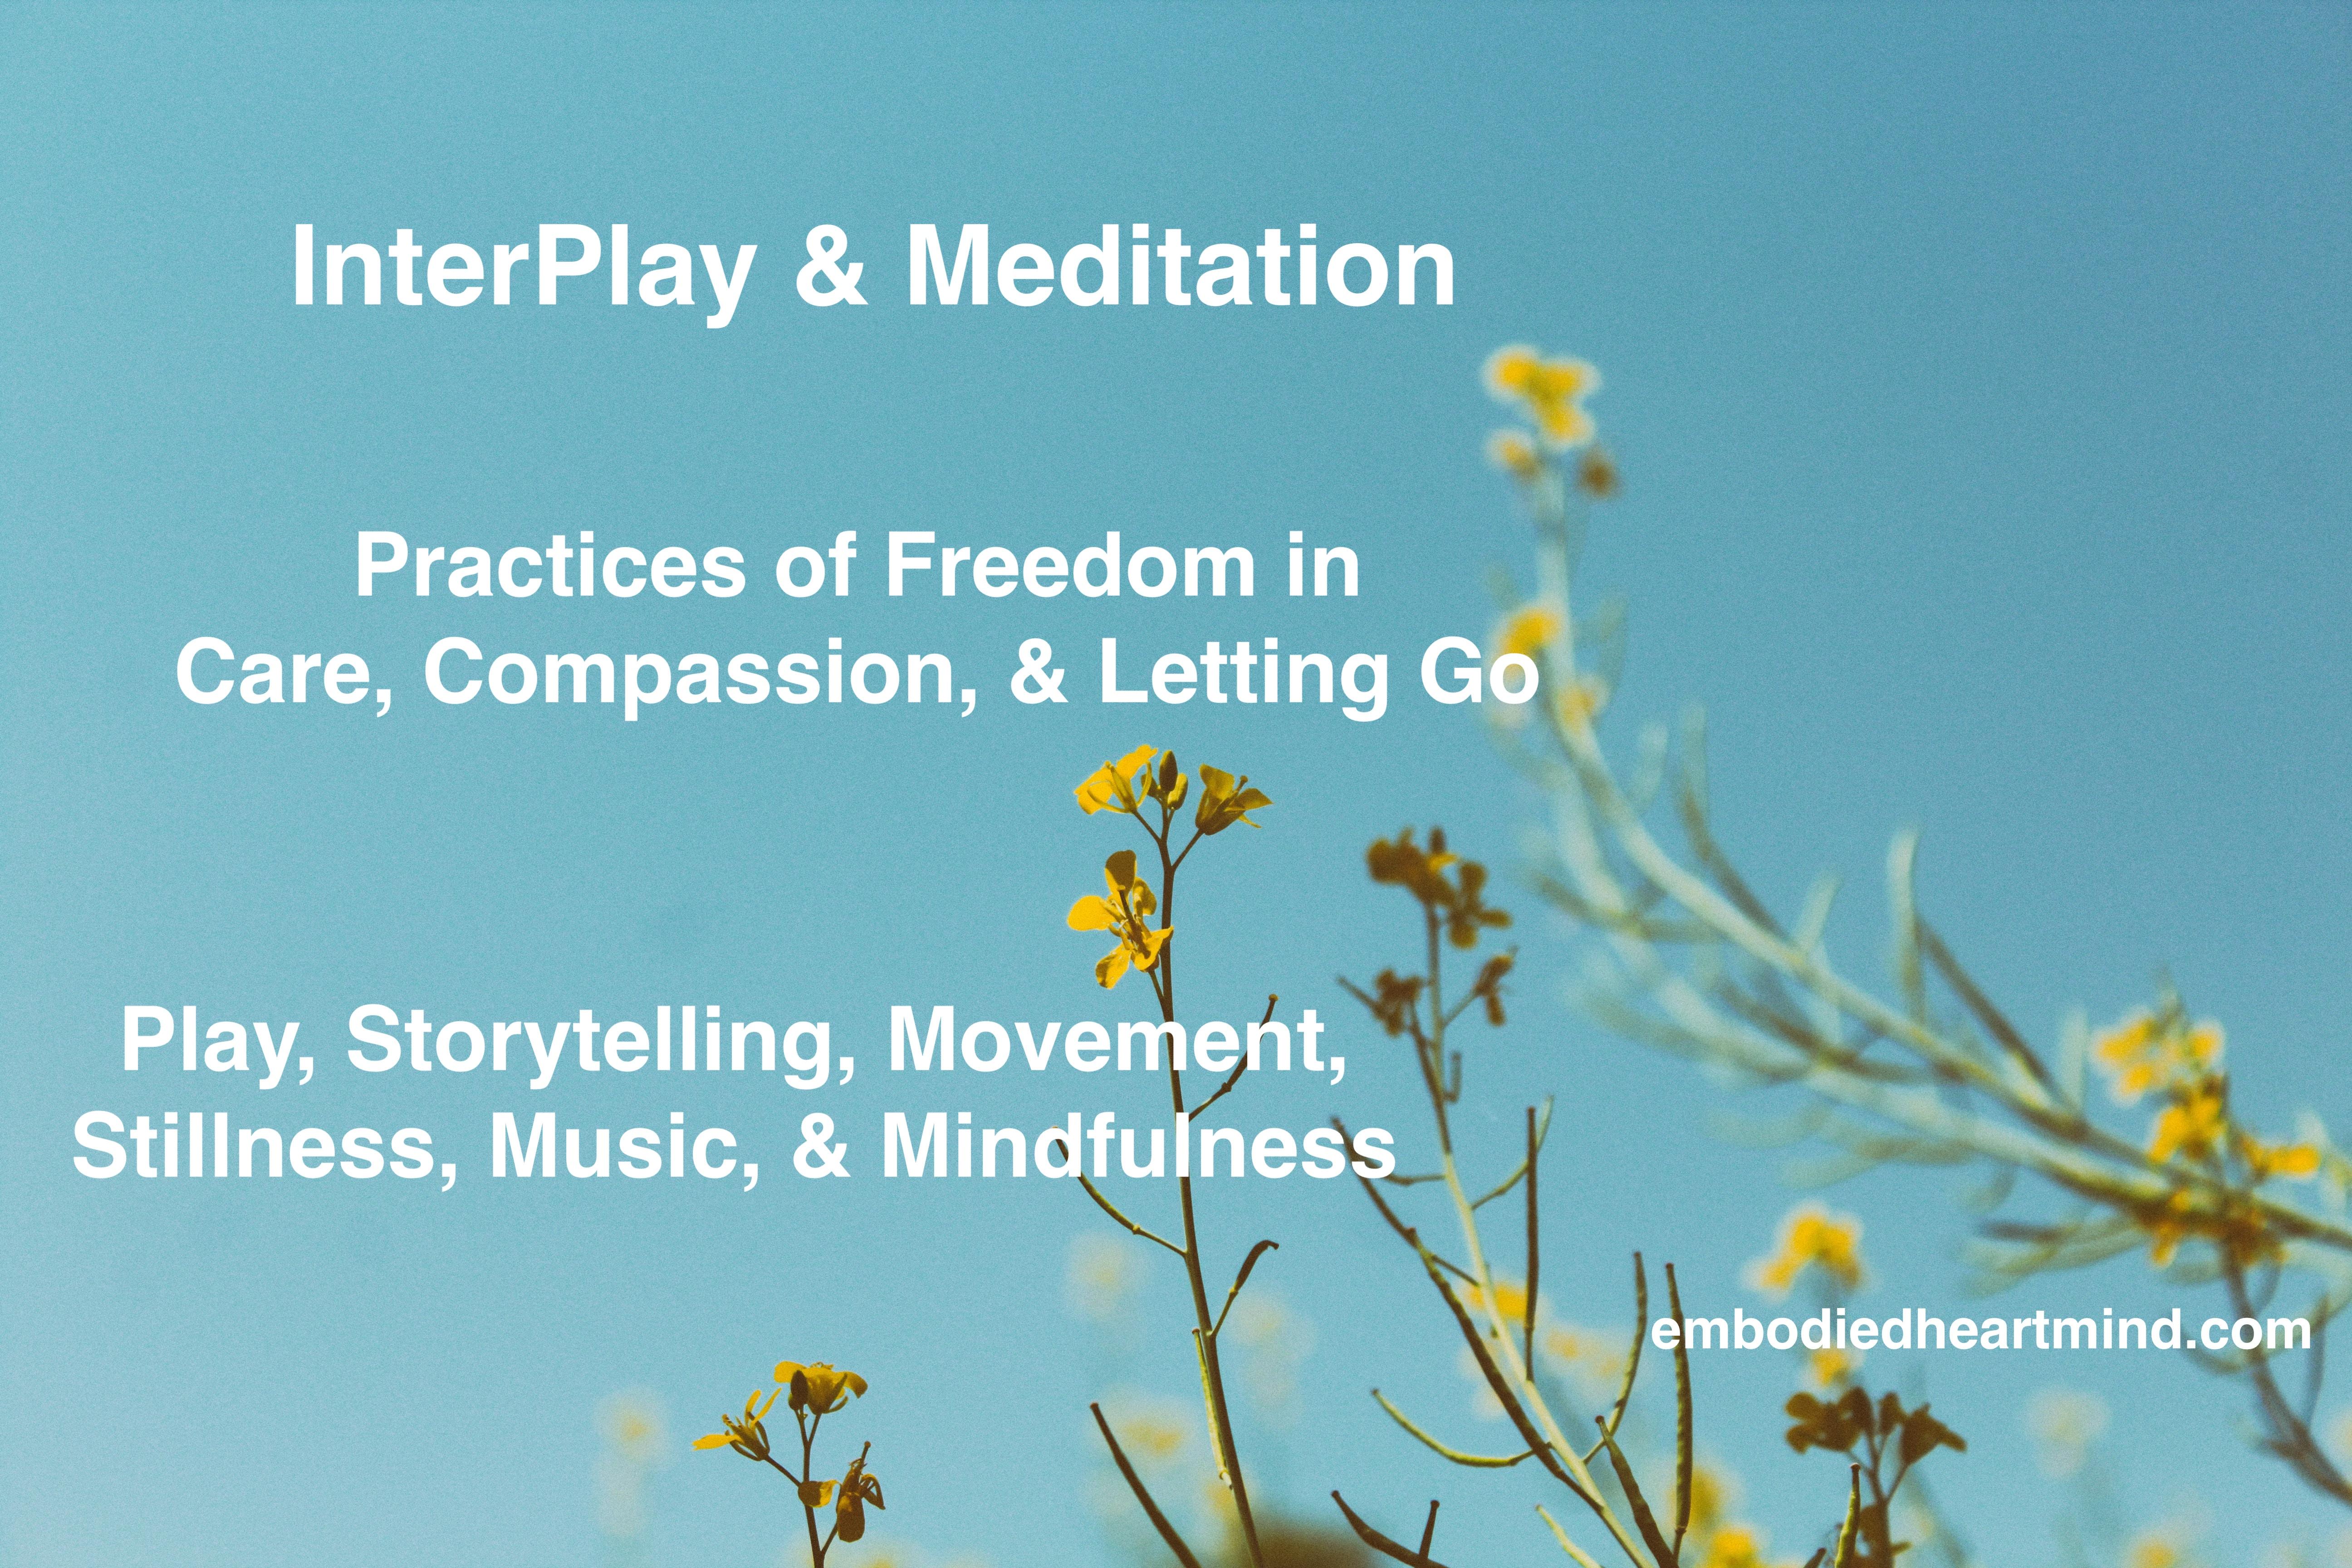 InterPlay & Meditation: Practices of Pleasure & Freedom